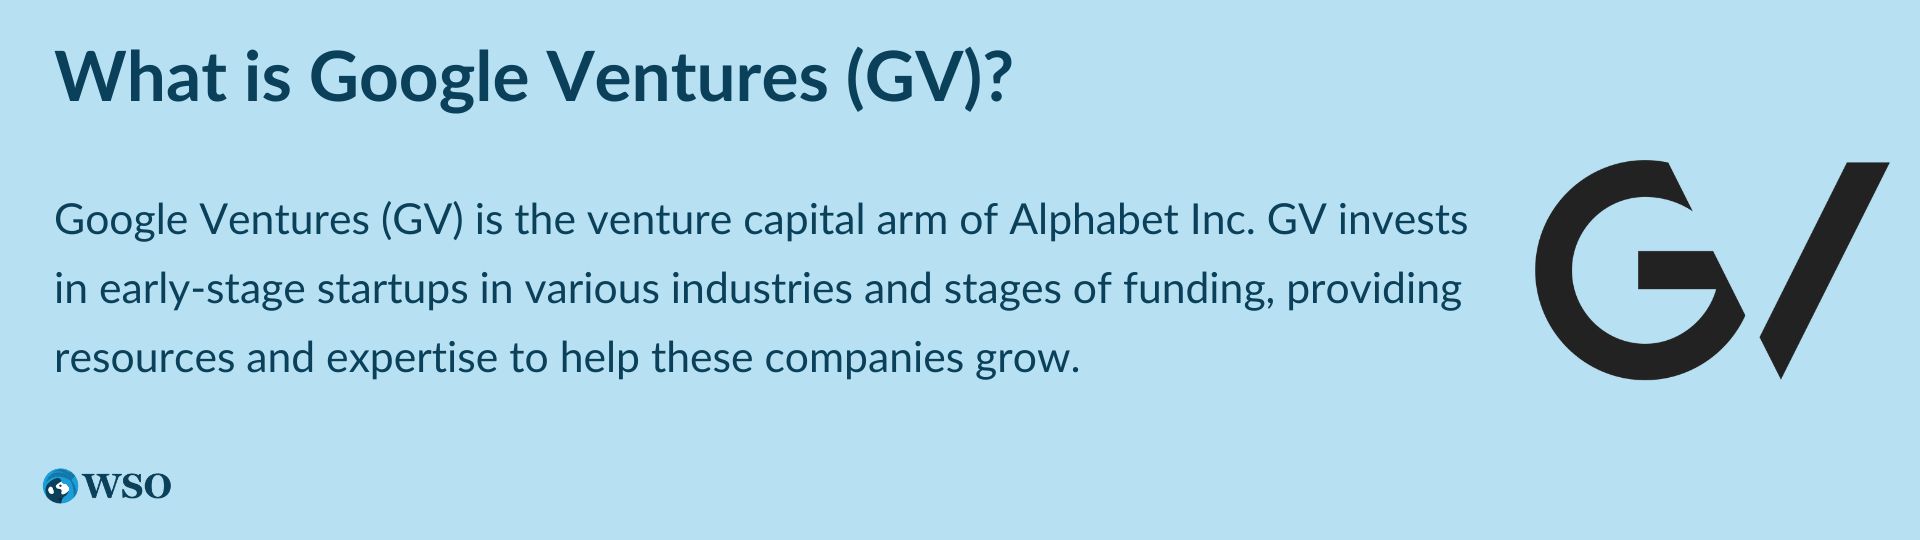 What is Google Ventures (GV)?